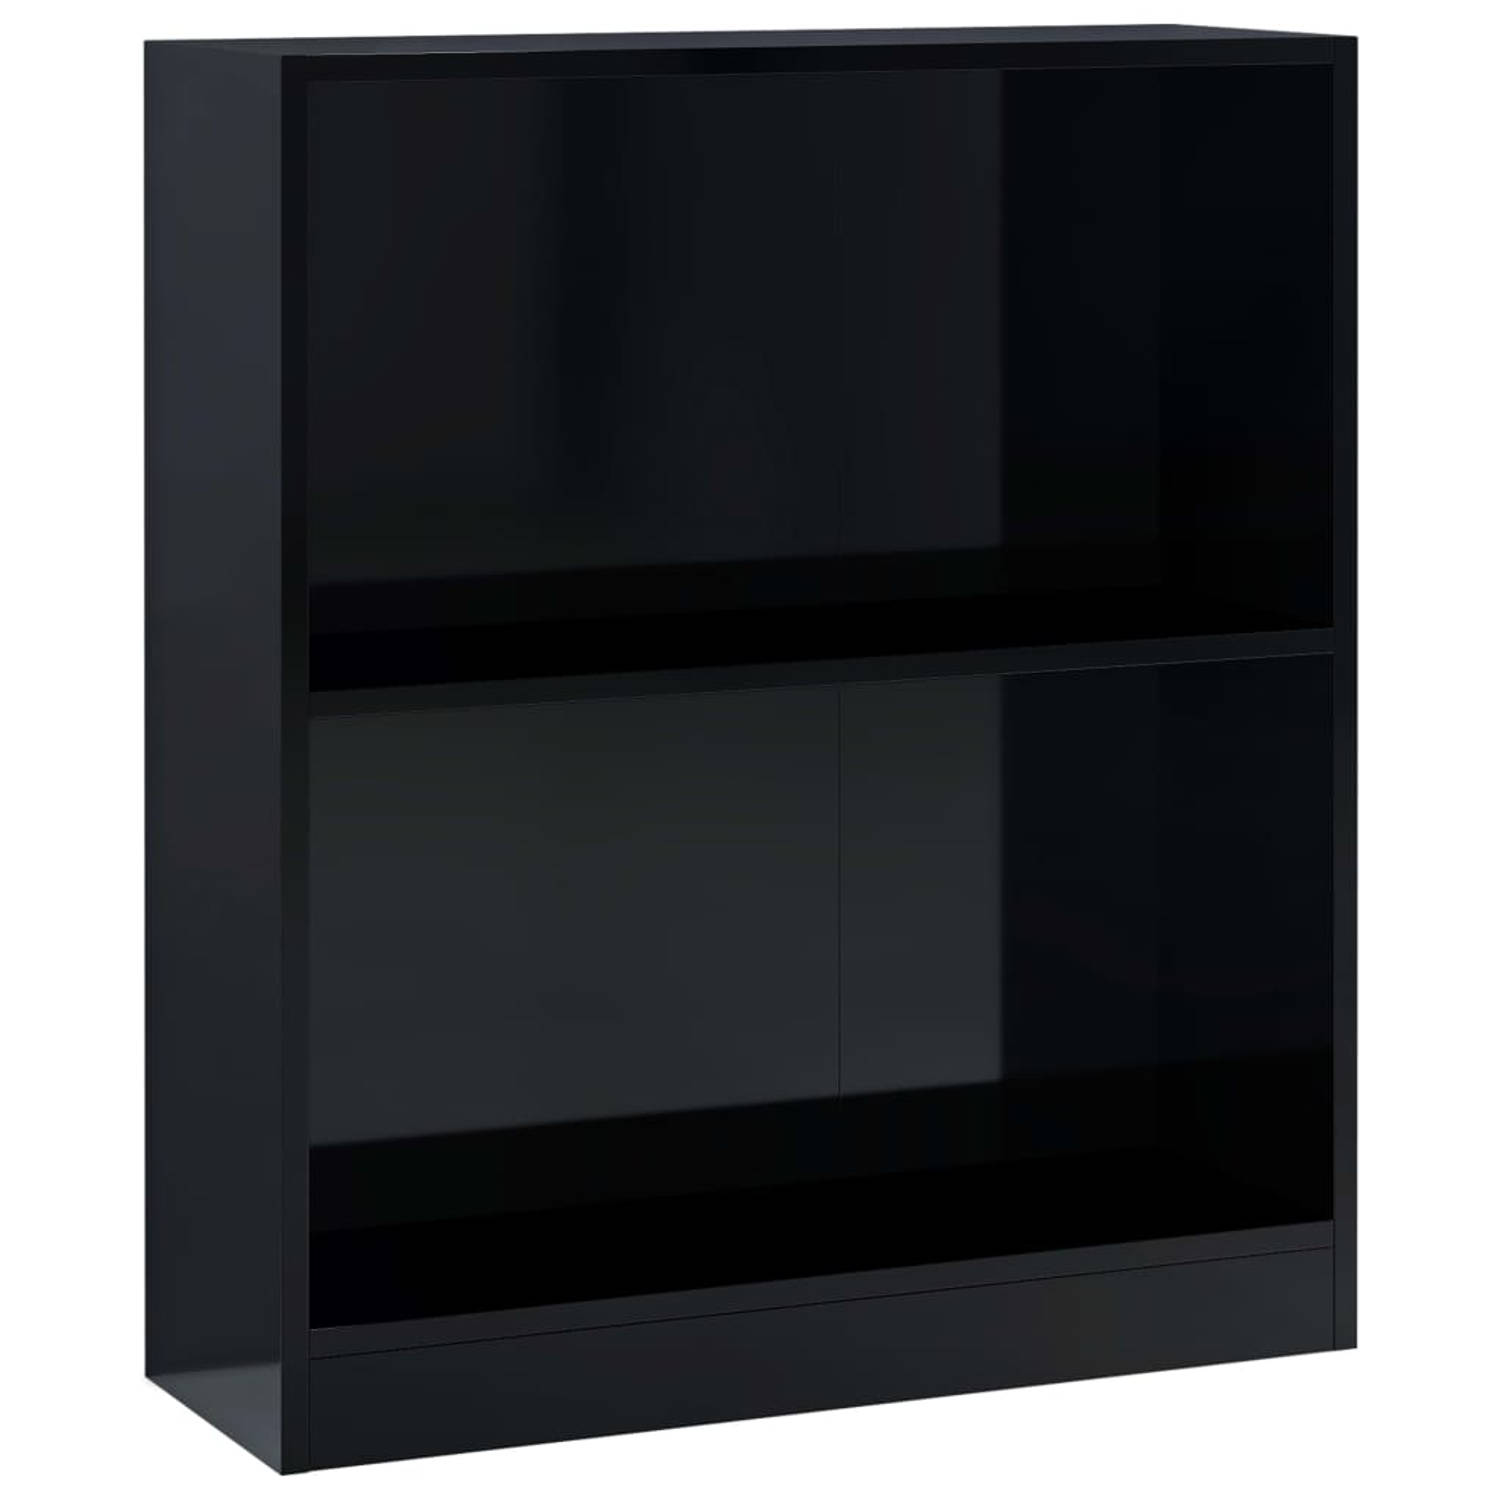 The Living Store Boekenkast - Hoogglans zwart - 60 x 24 x 74.5 cm - 2-laags ontwerp